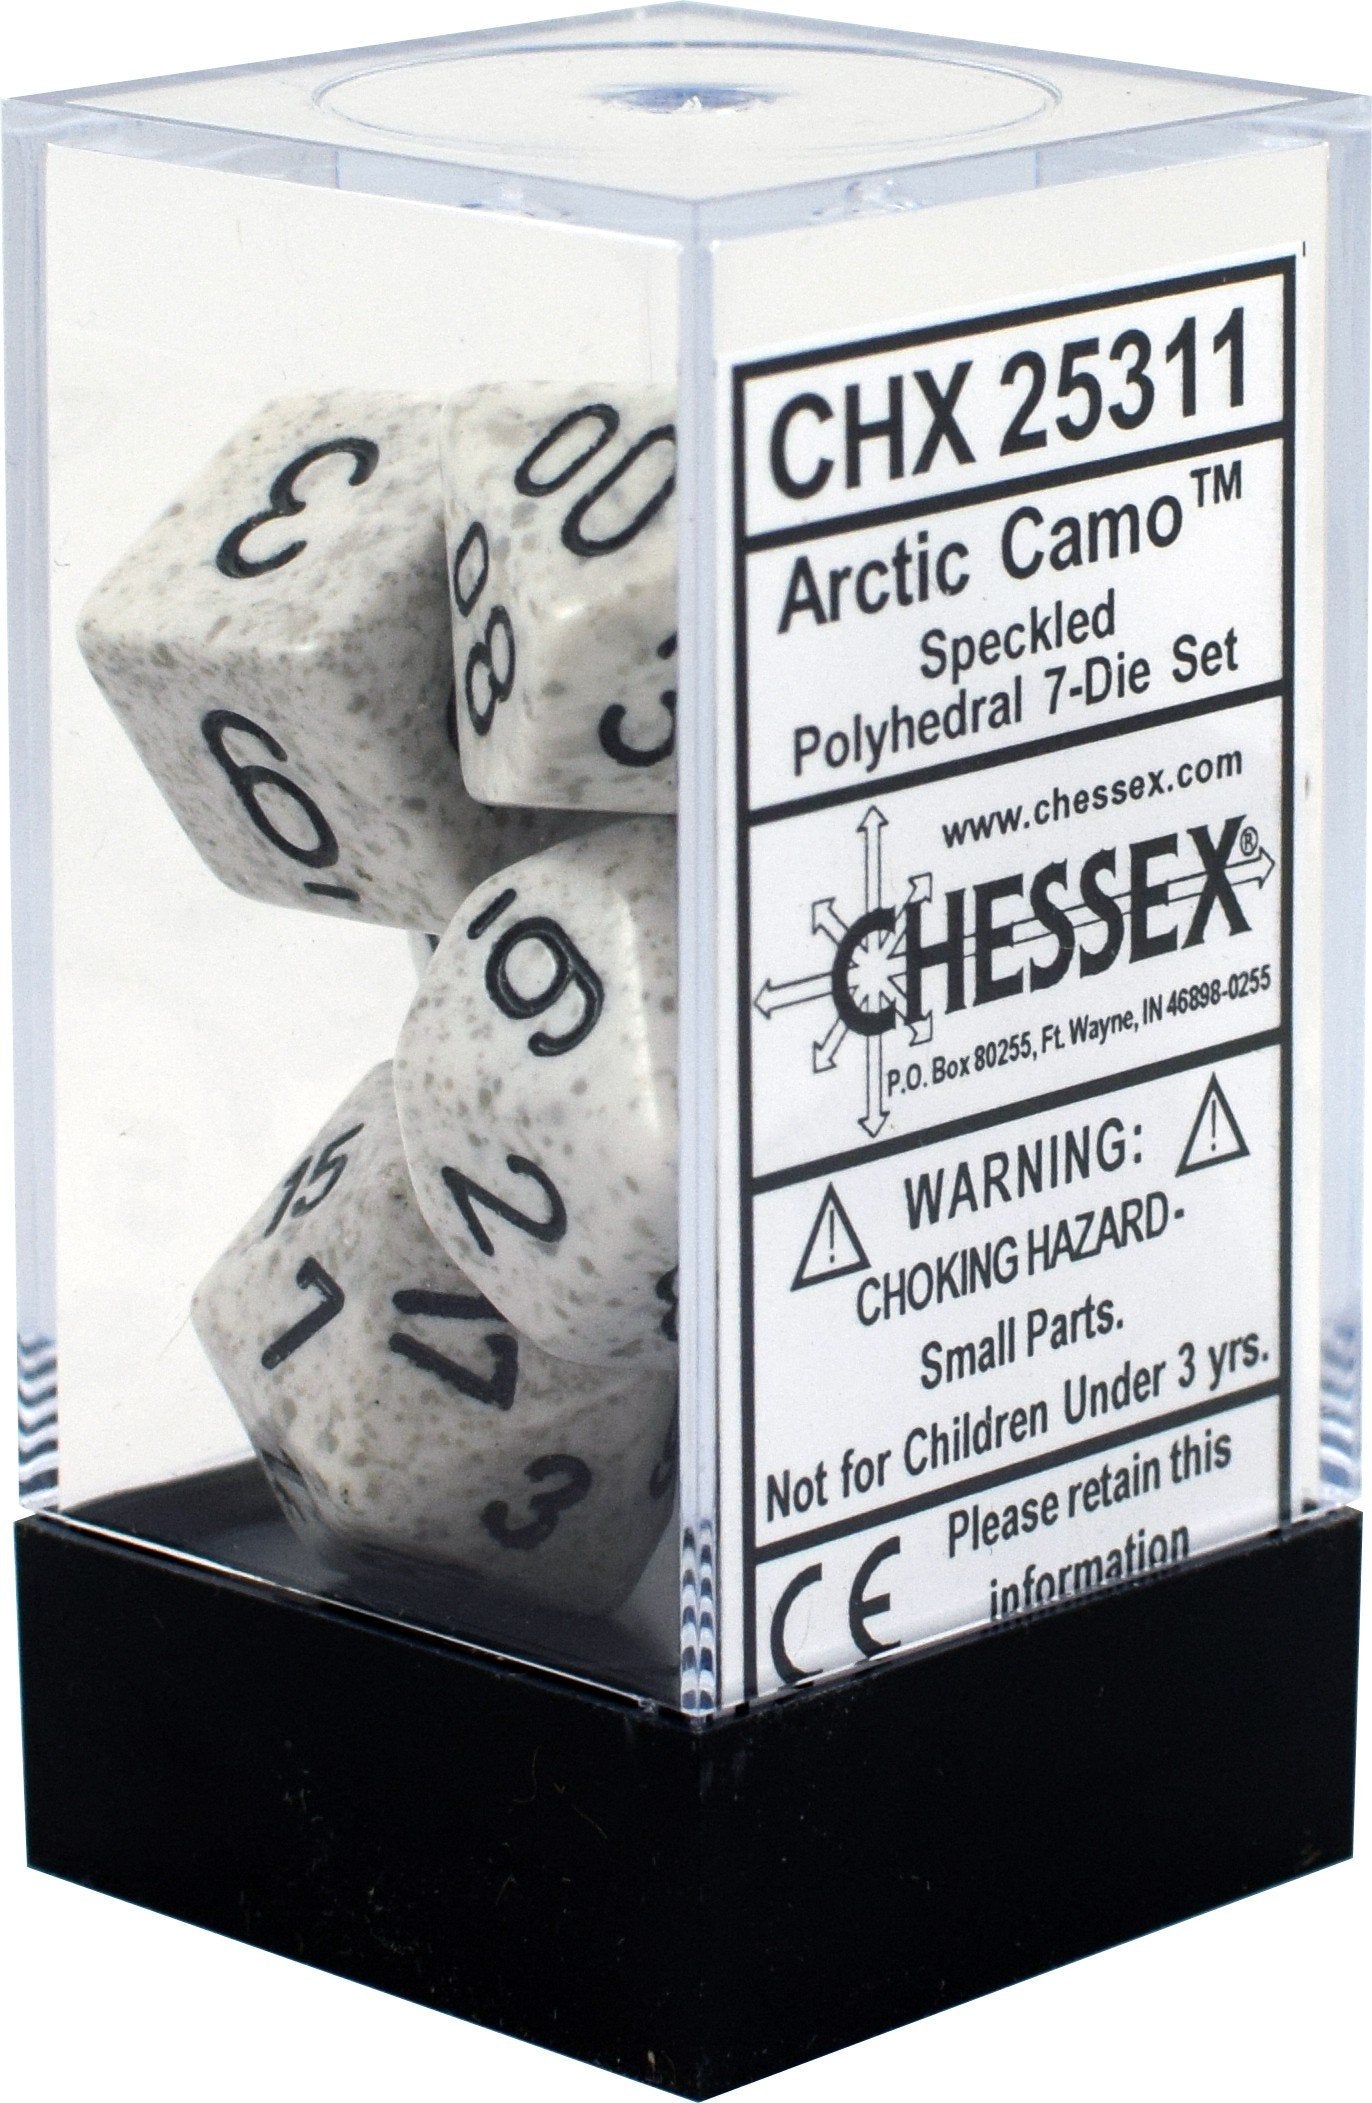 Chx 25311 Speckled Arctic Camo 7-Die Set - Good Games